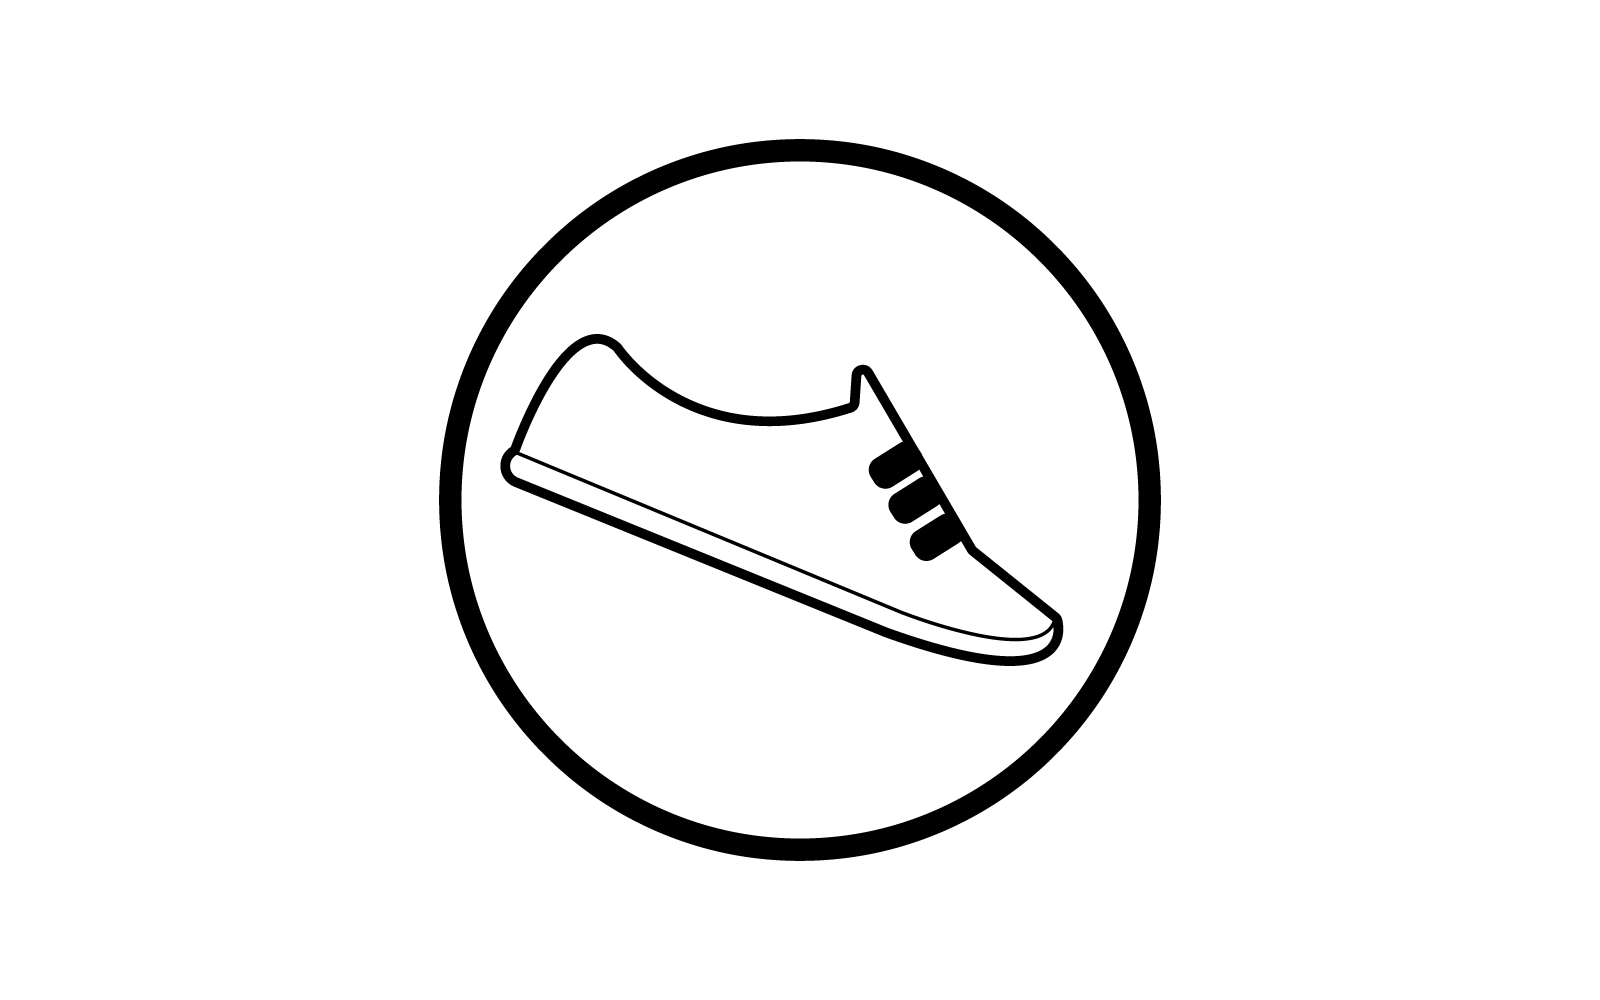 boty ilustrace logo vektorové šablony